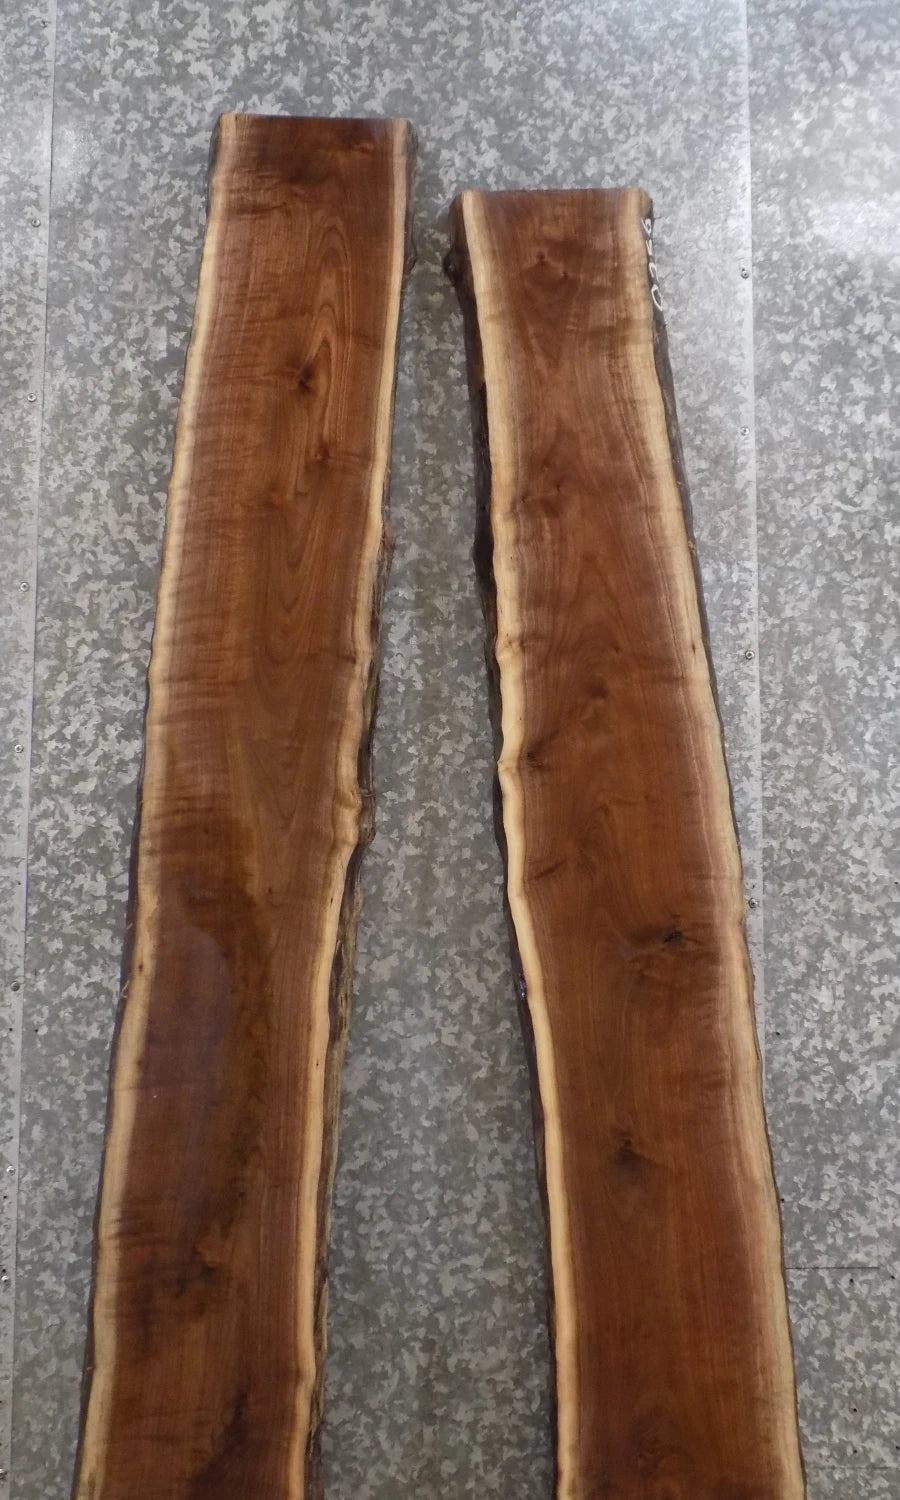 2- Live Edge Black Walnut River Table/Bar Top Wood Slabs 1019-1020